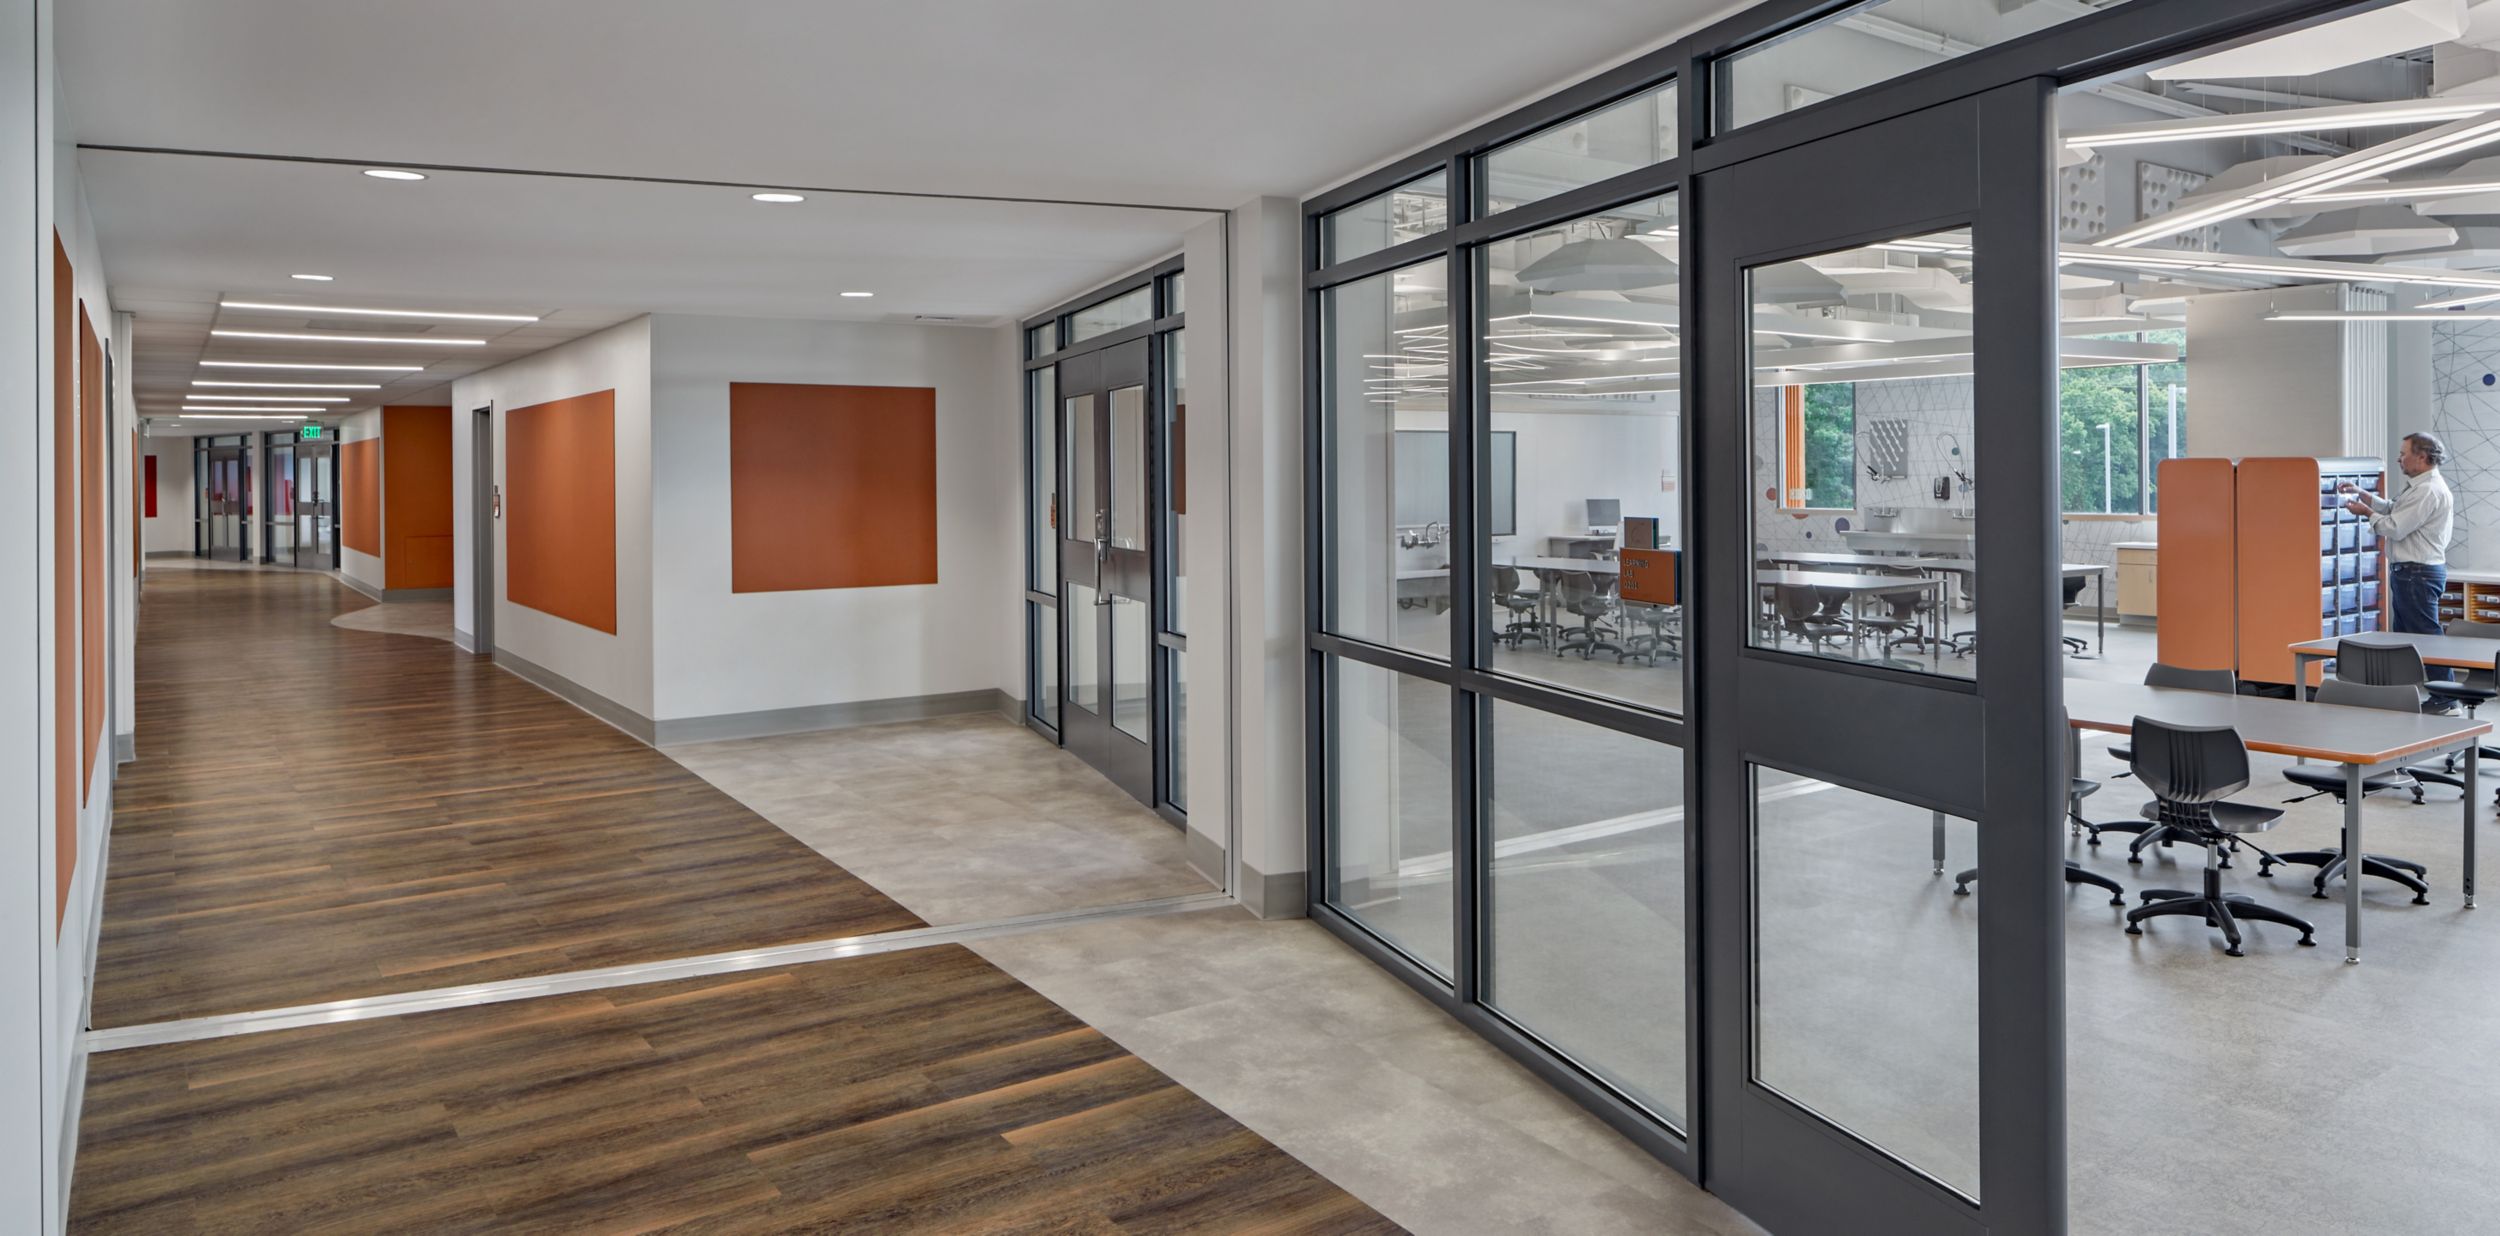 Interface Textured Stones and Natural Woodgrains LVT in office hallway setting  número de imagen 2